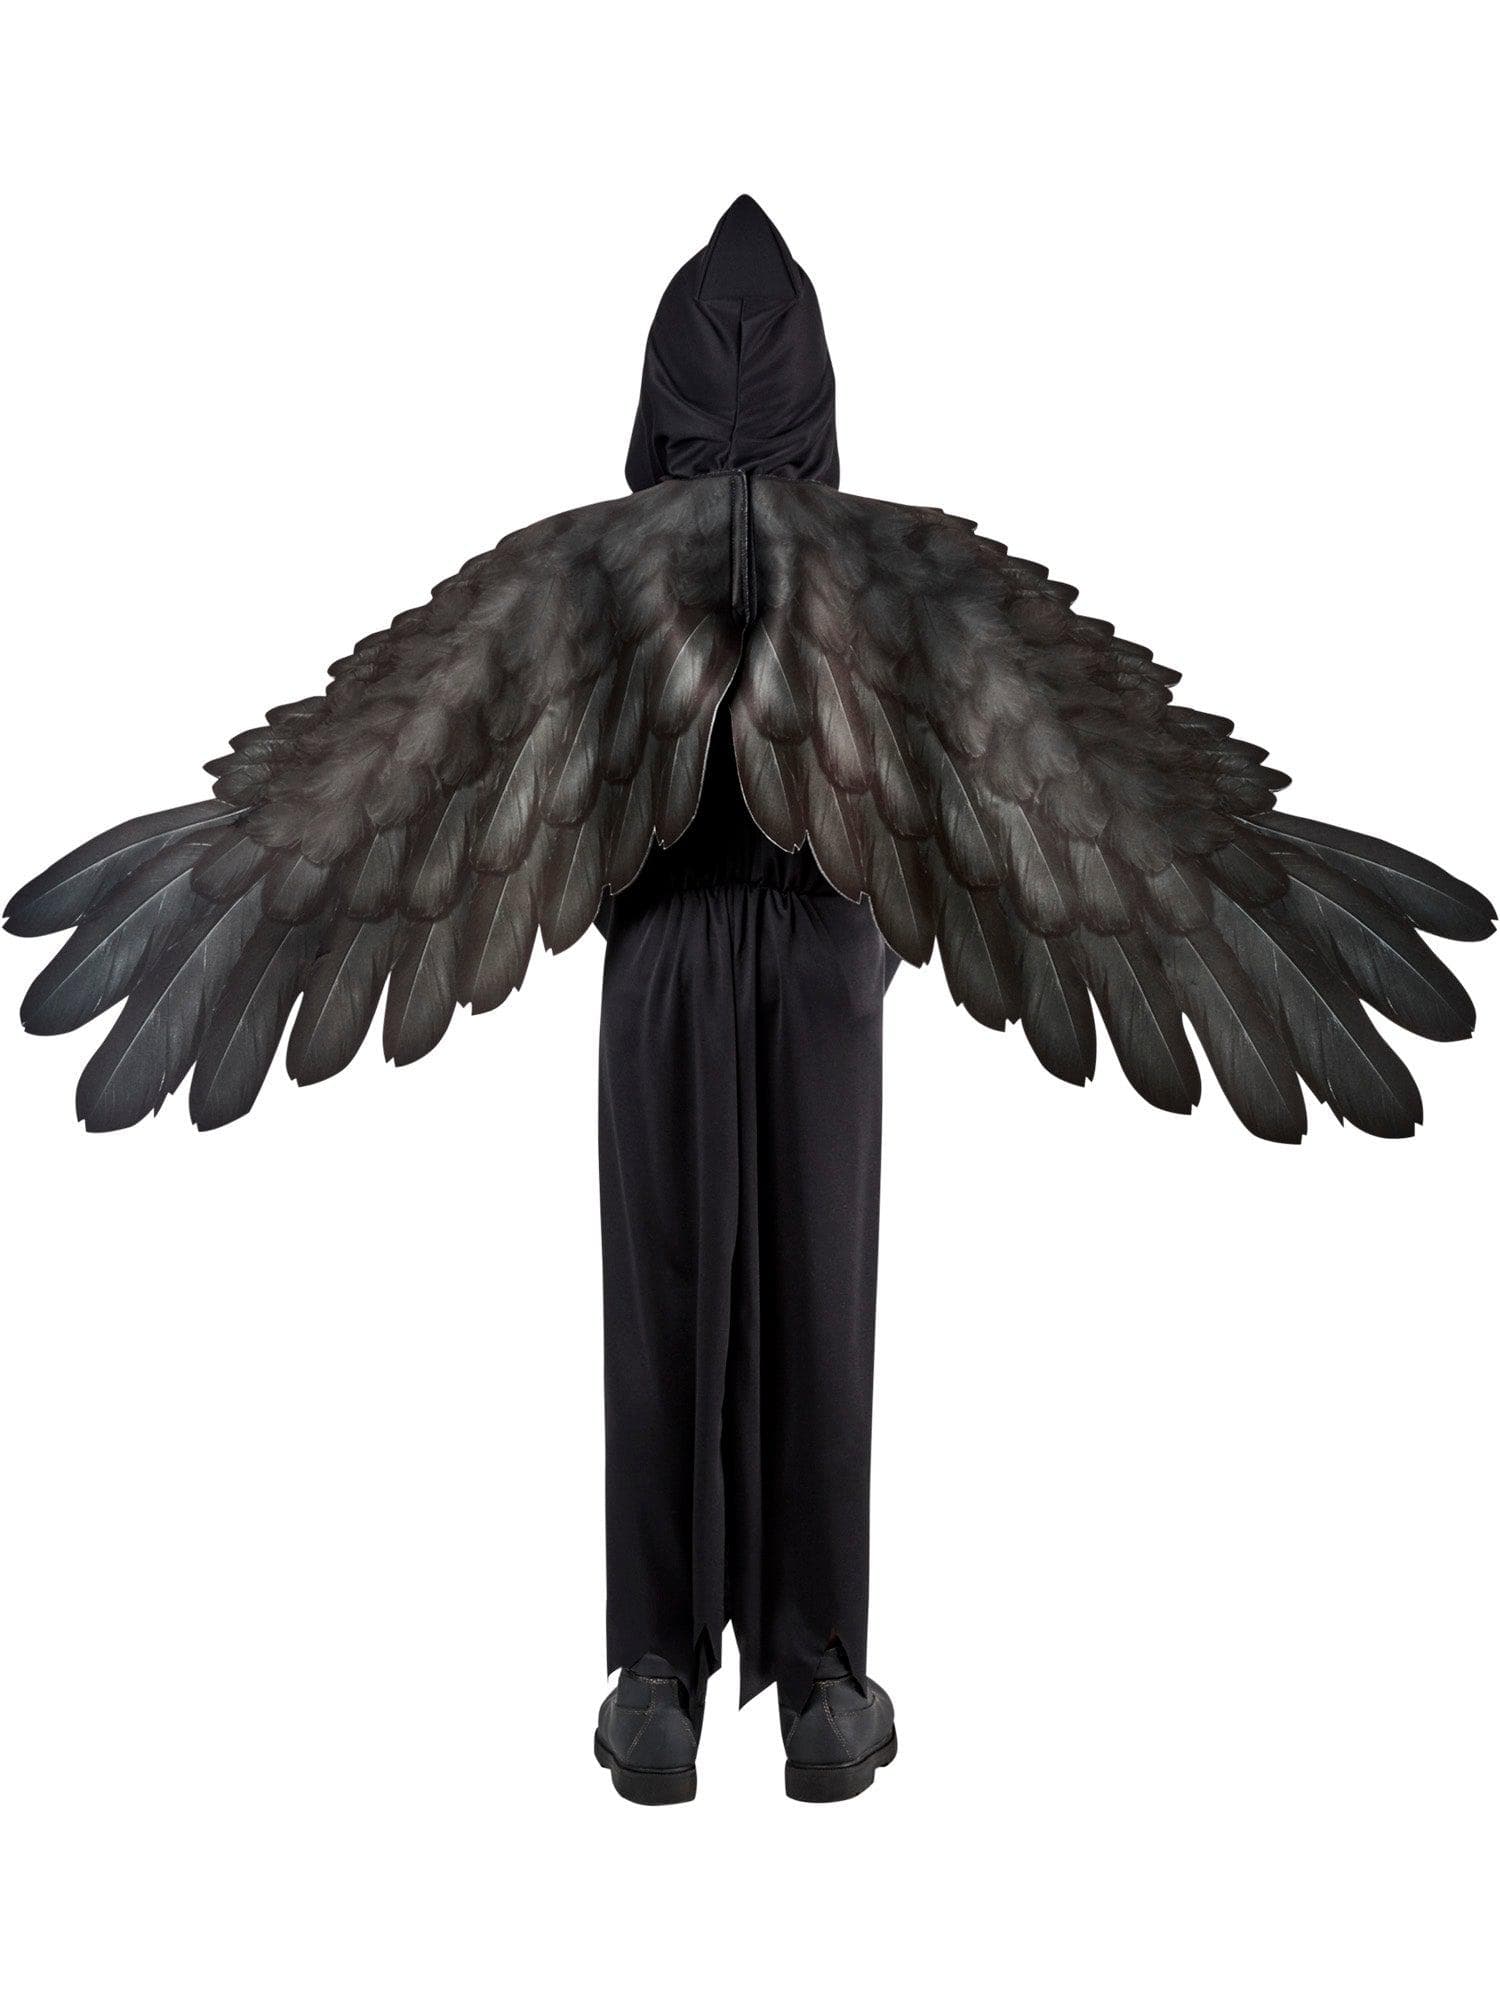 Boys' Hooded Death Angel Costume - costumes.com